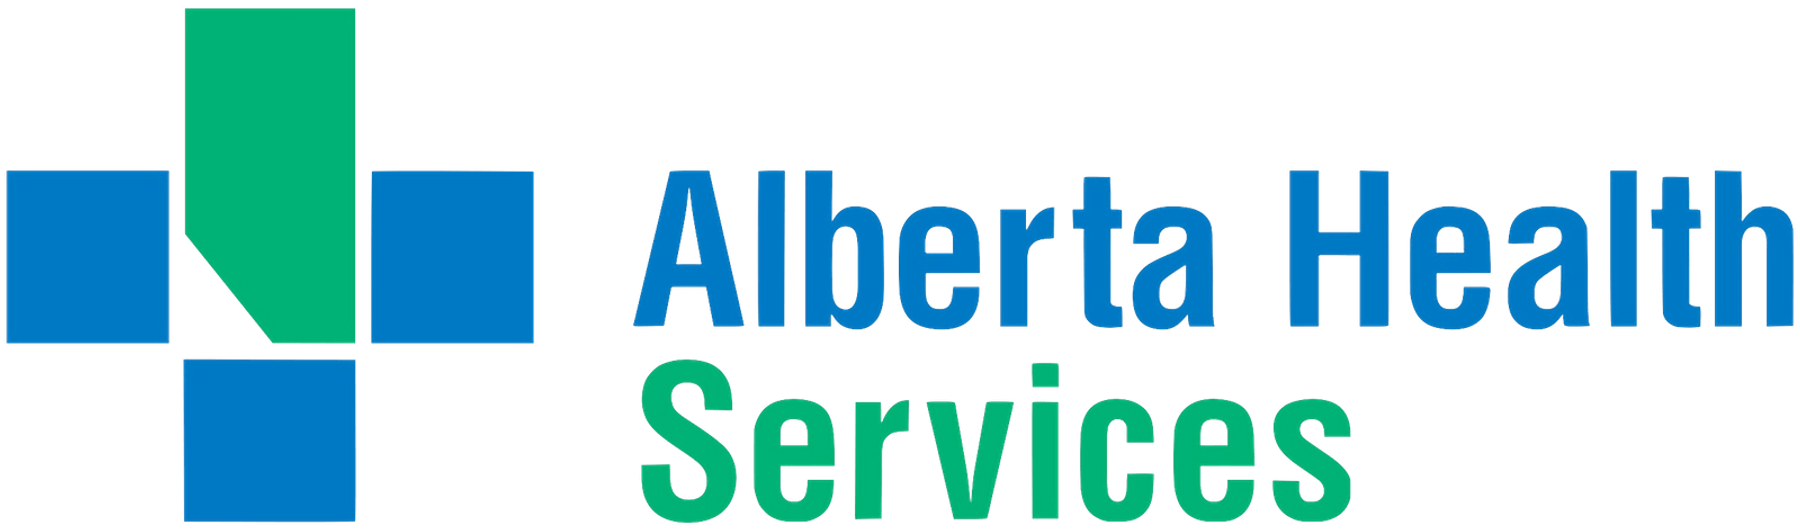 Alberta Health Services logo on a transparent background